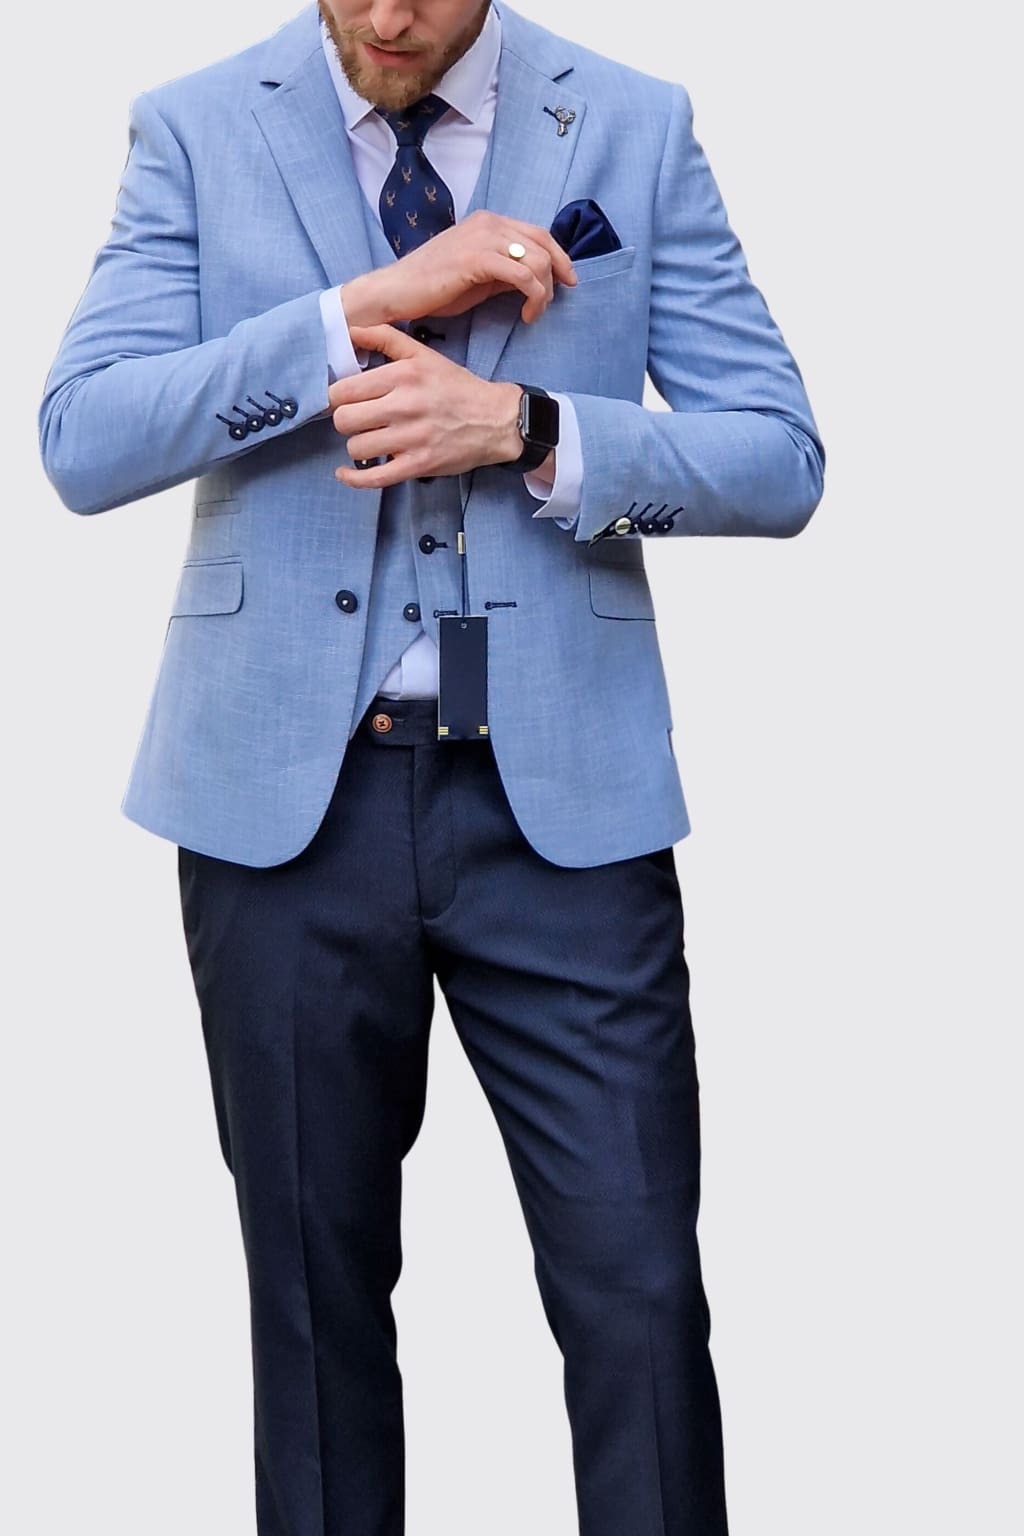 Navy blue wool suit trousers | The Kooples - US